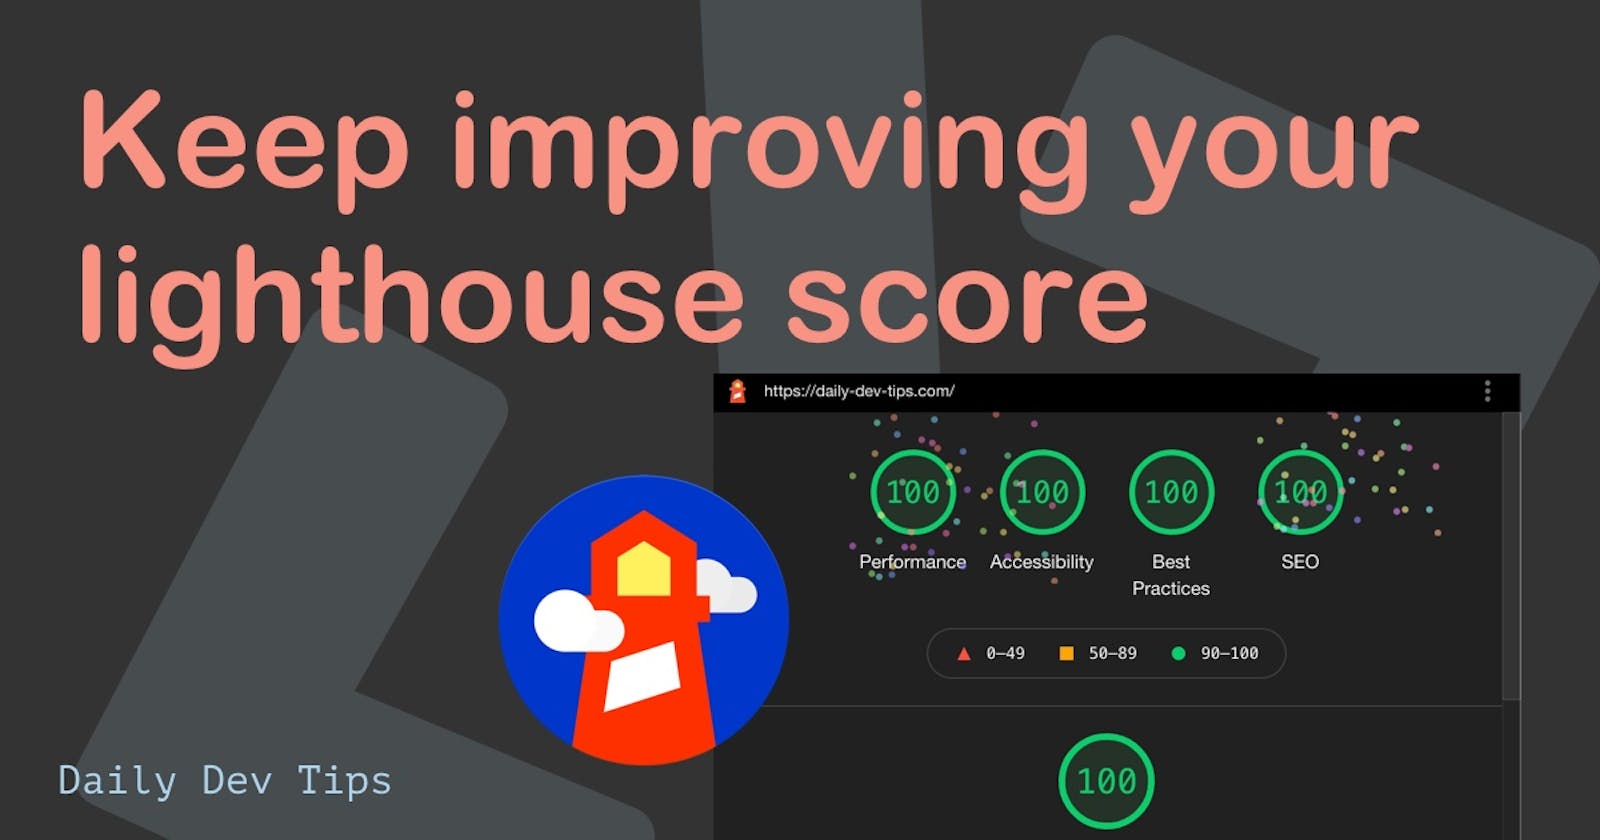 Keep improving your lighthouse score